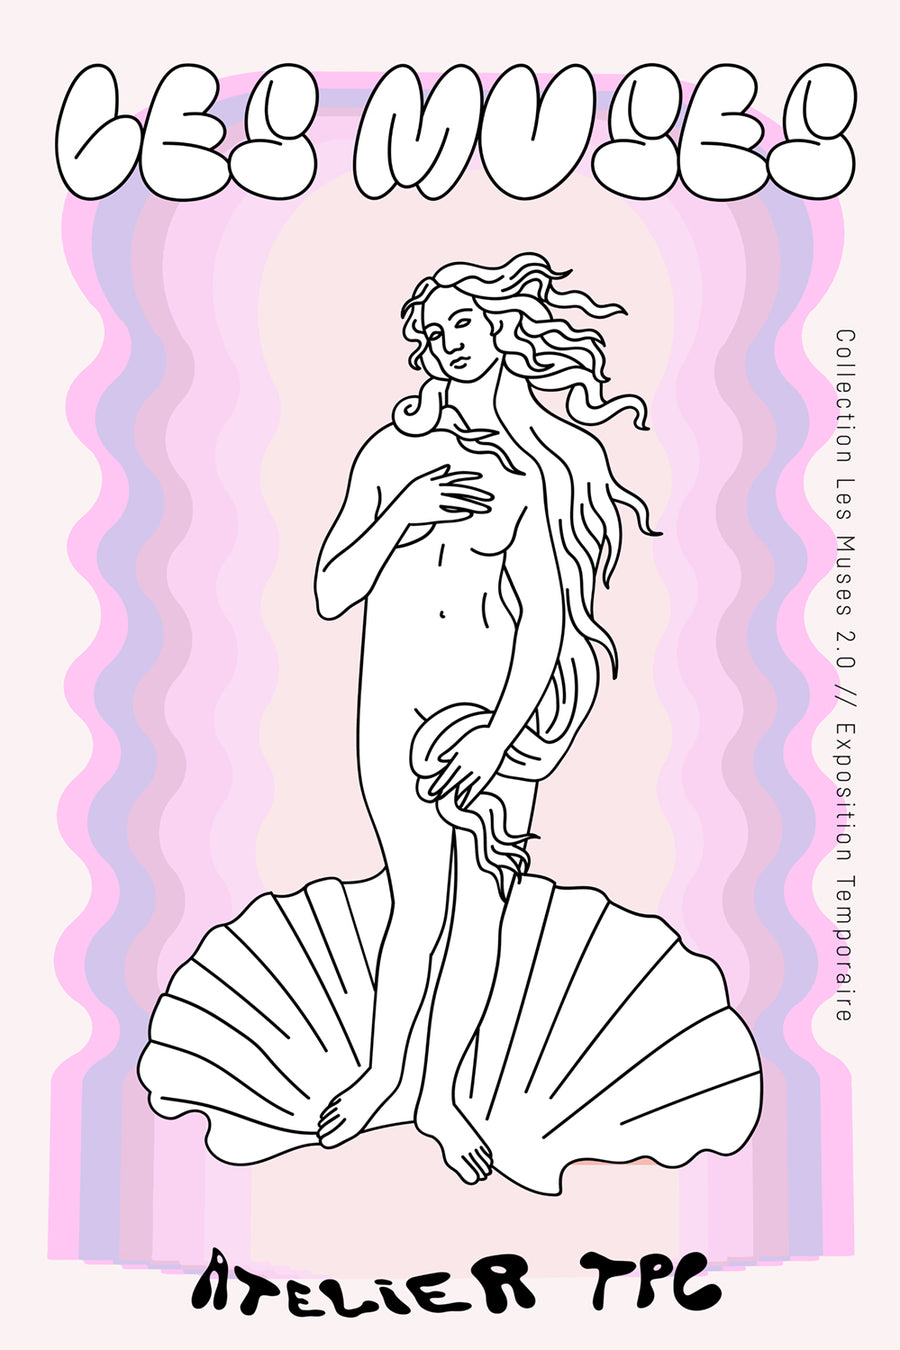 Les Muses greek goddess statue art print  mermaid